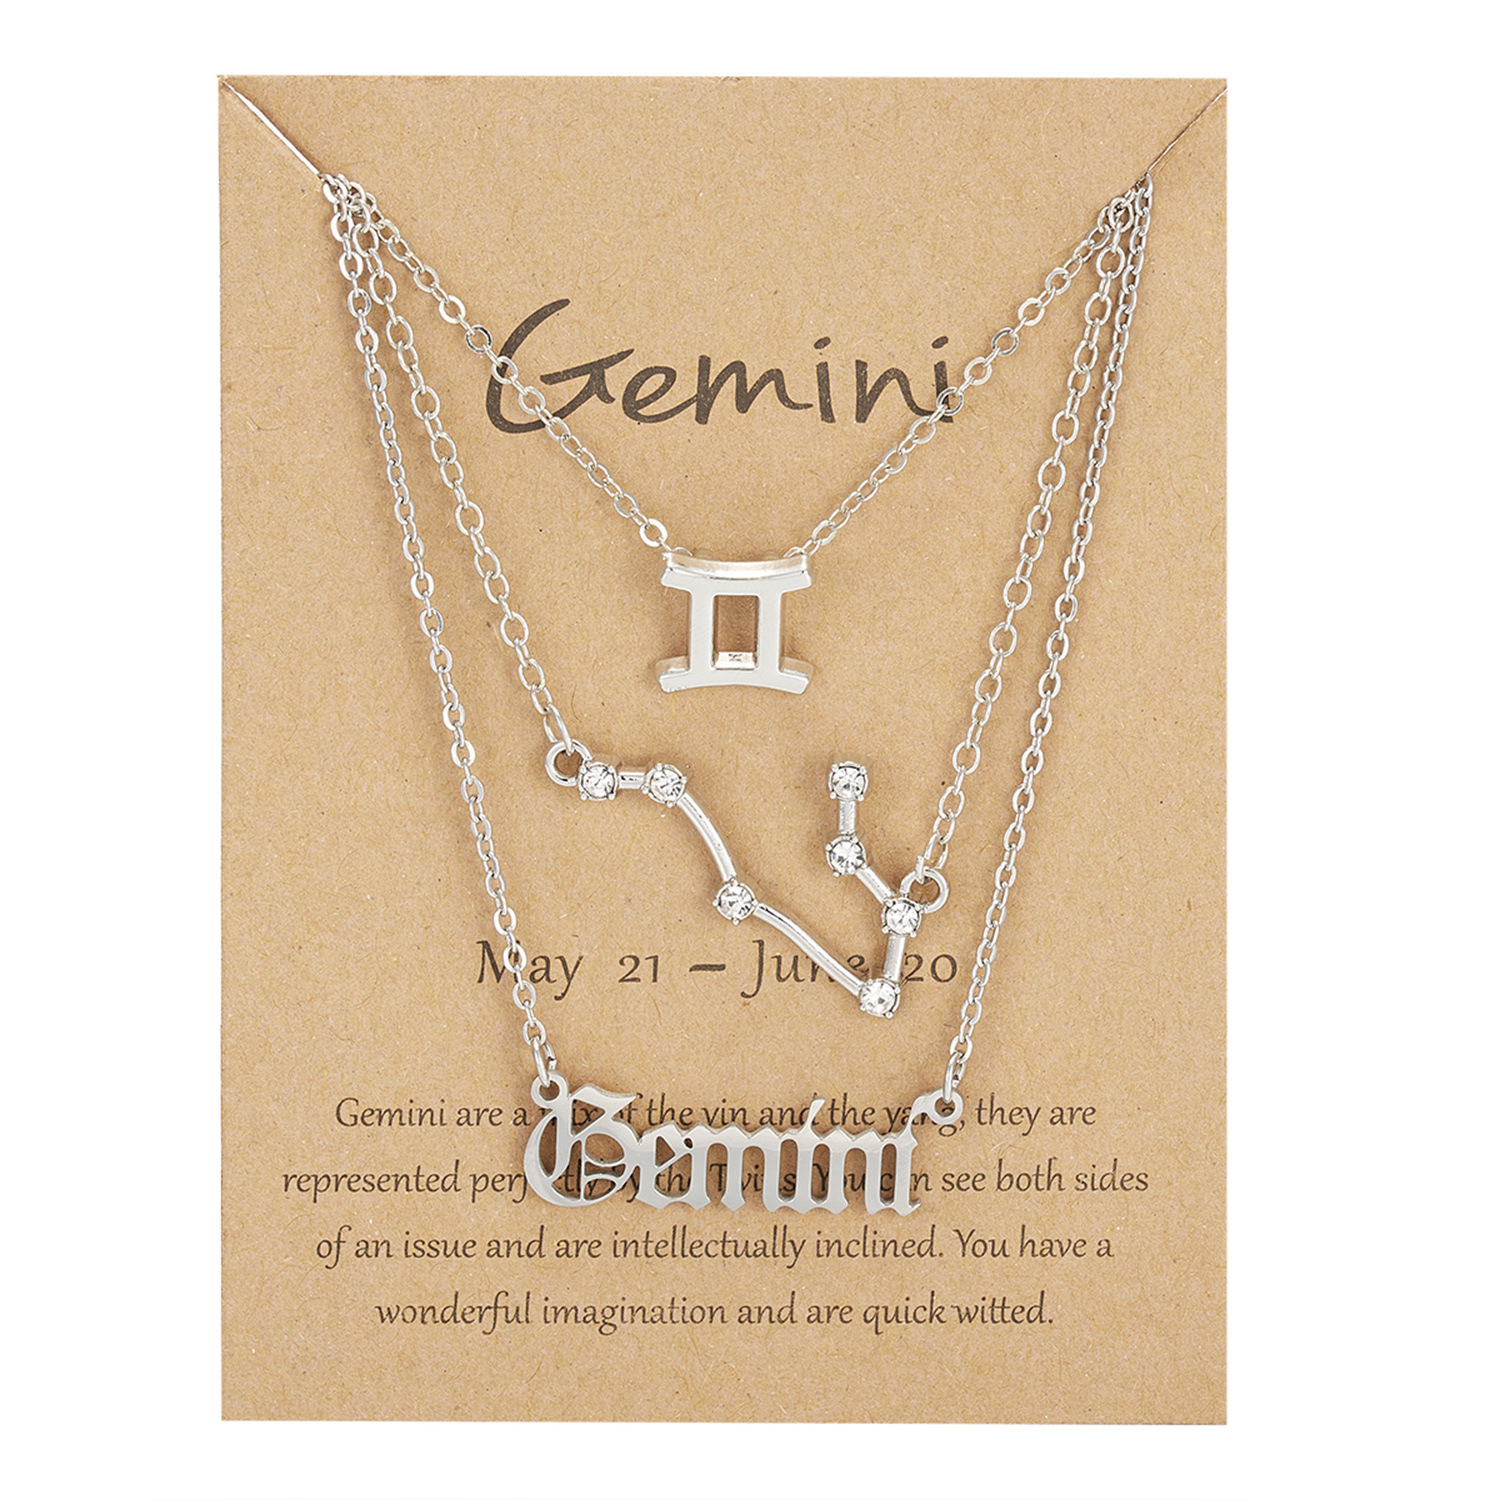 17:Gemini silver